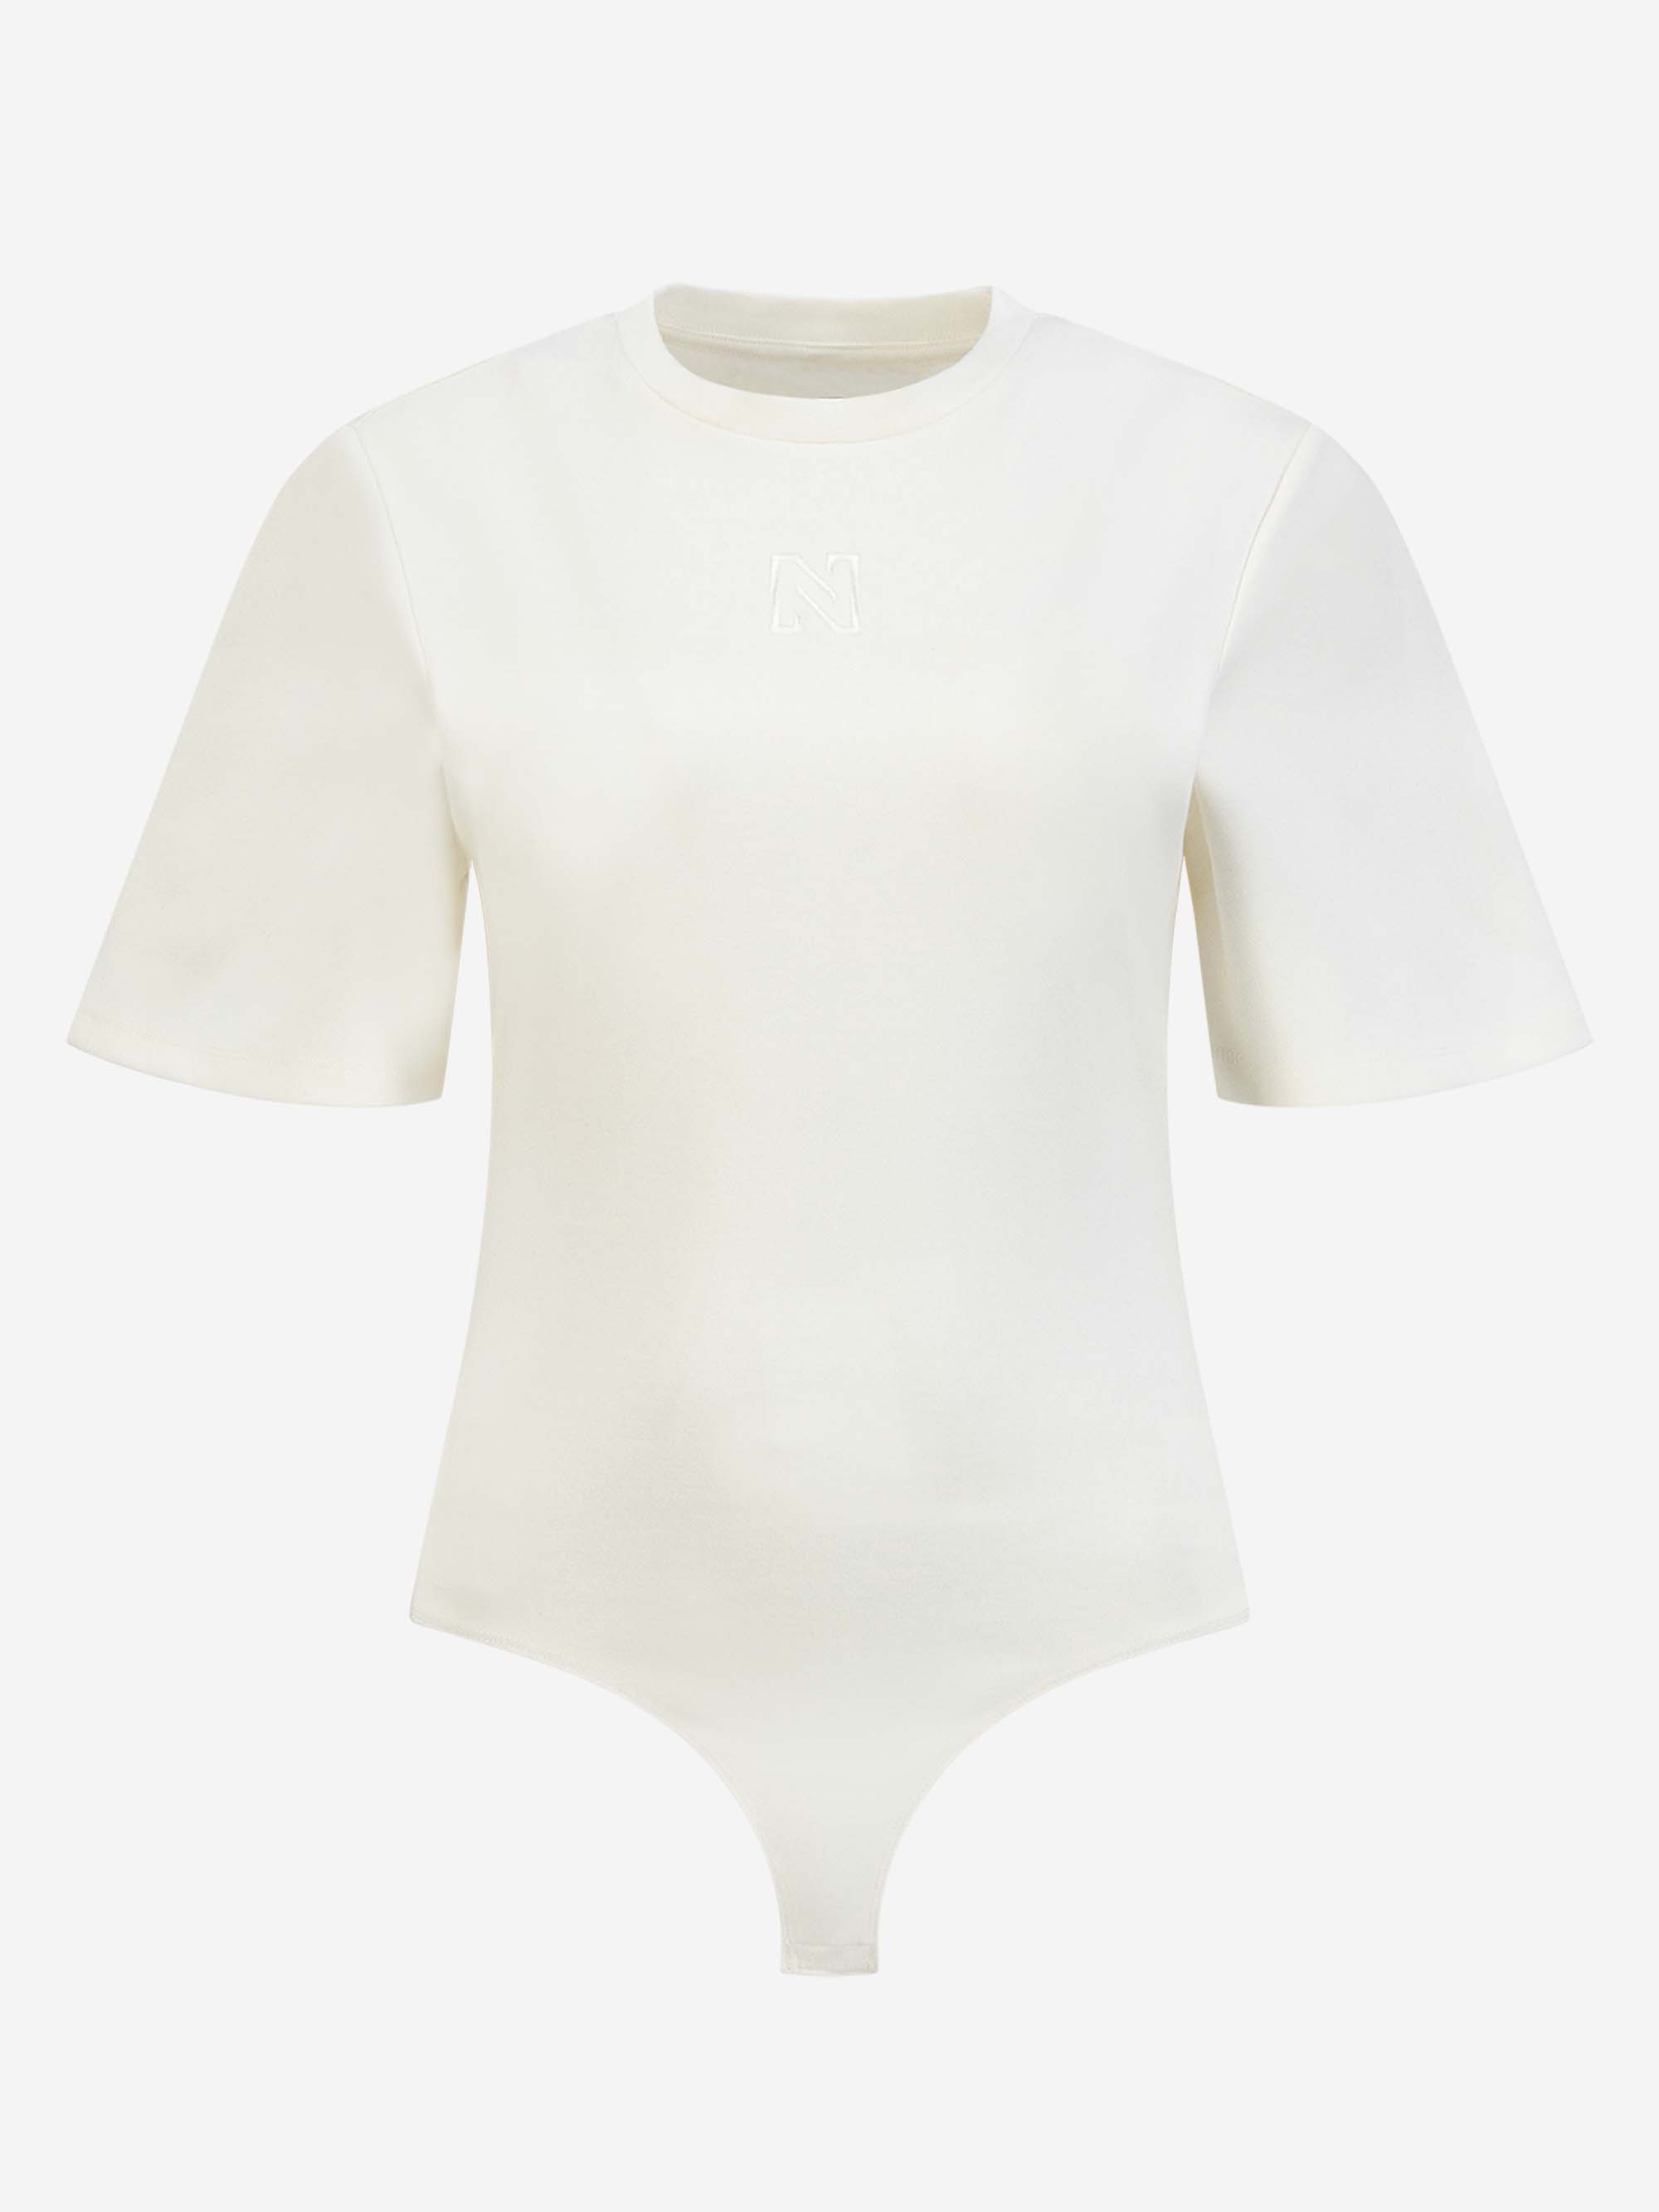 Nikkie T-shirt Bodysuit Star White